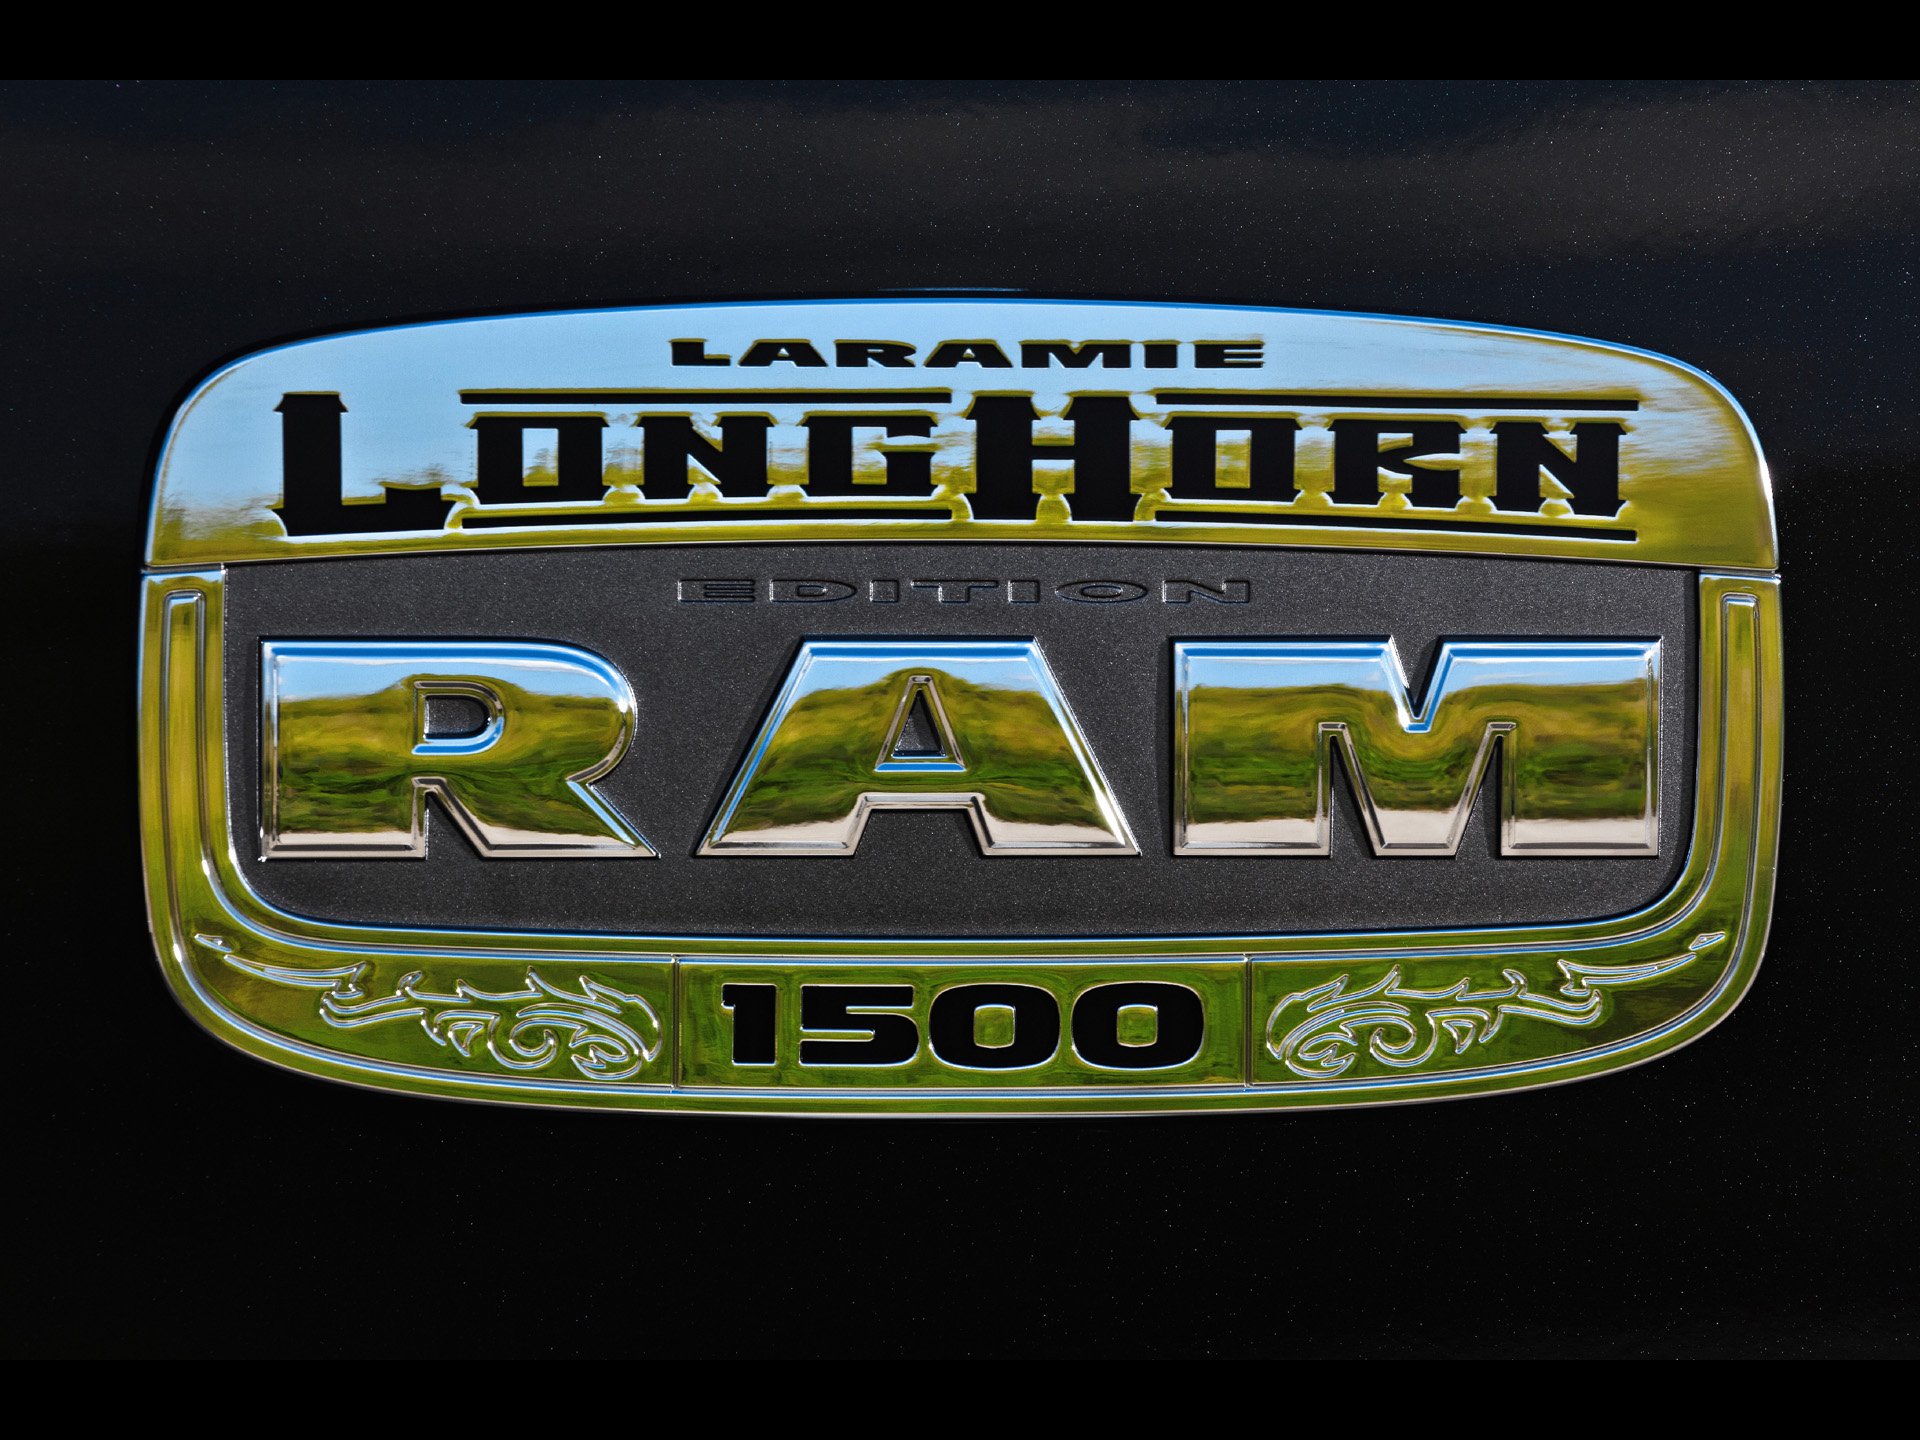 2011 Ram Laramie Longhorn pickup truck 1500 logo reflection wallpaper 1920x1440